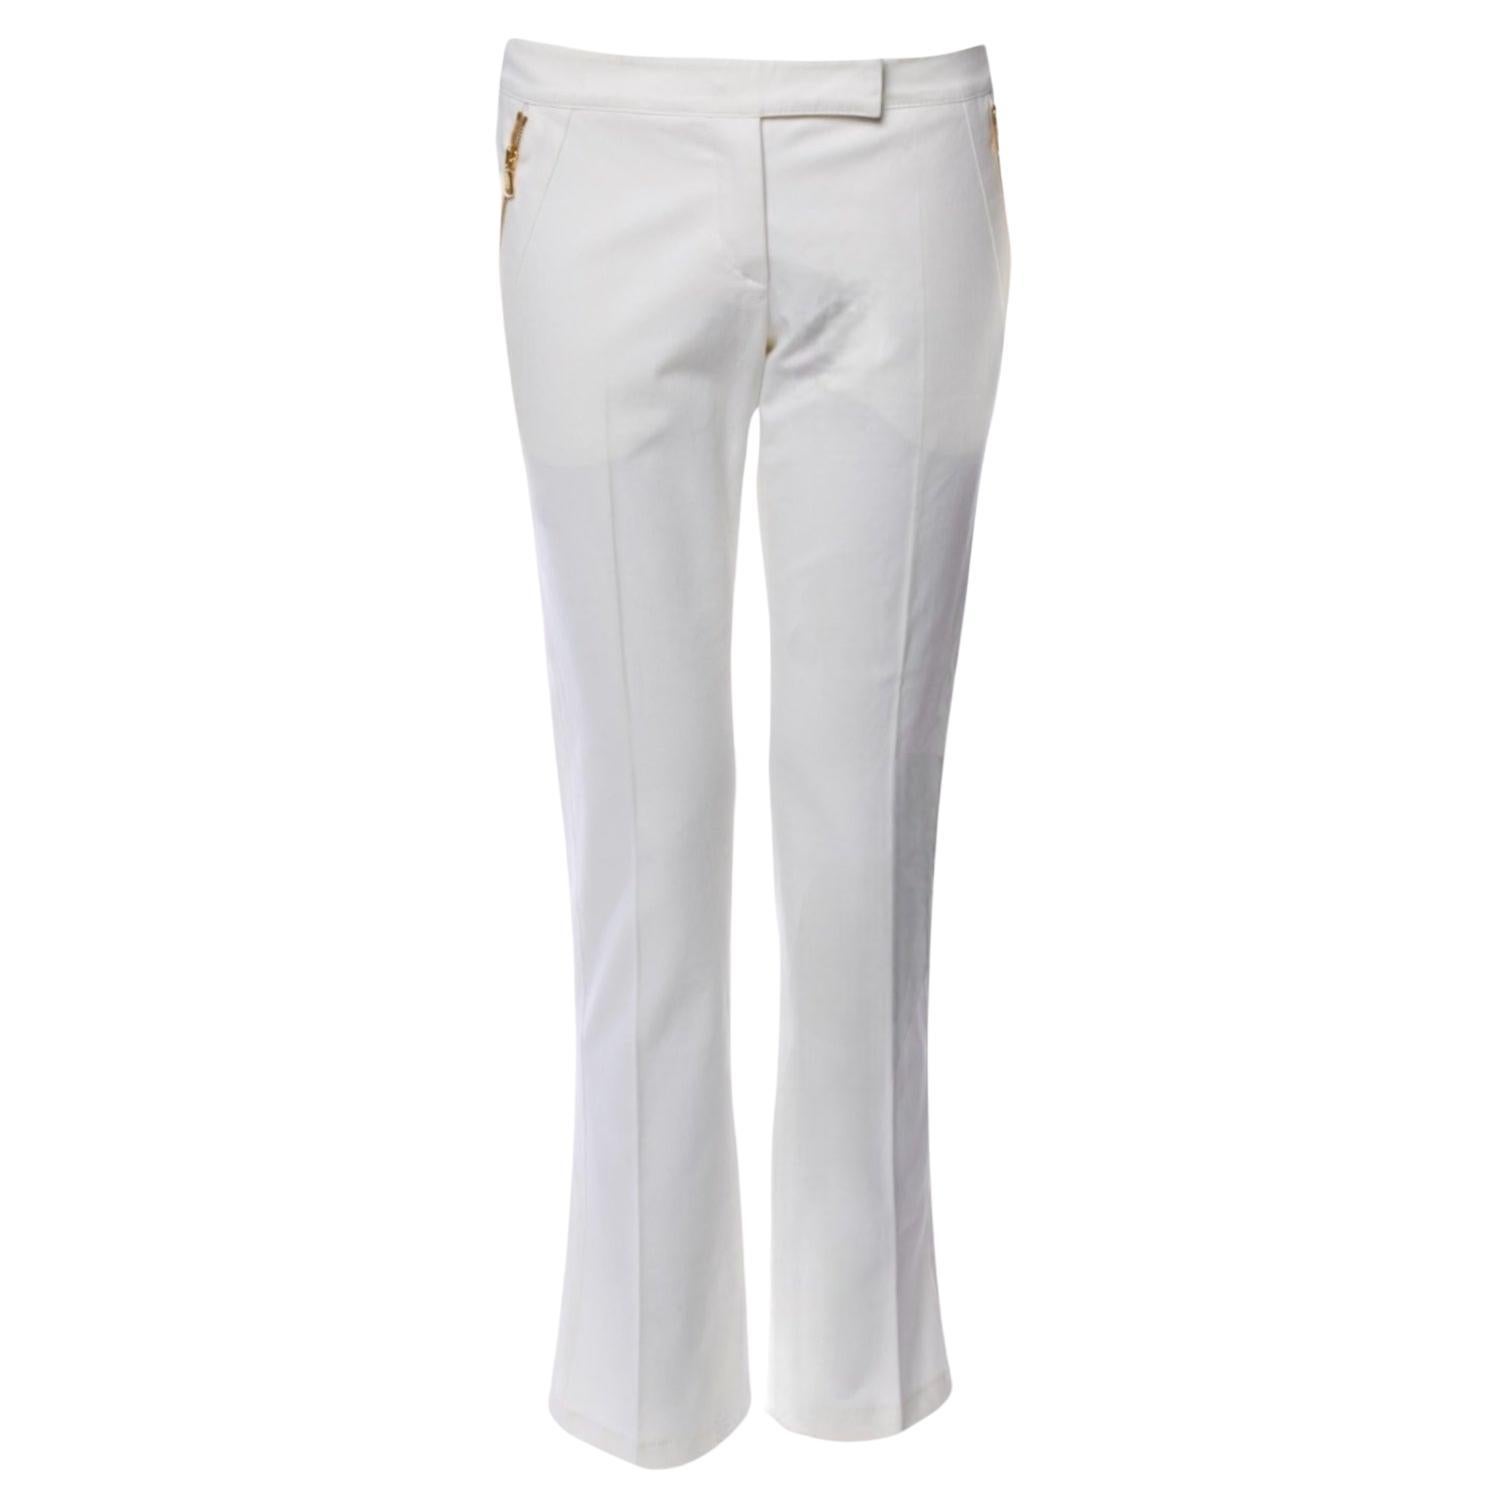 UNWORN Emilio Pucci Classy White Pants Trousers 42 For Sale